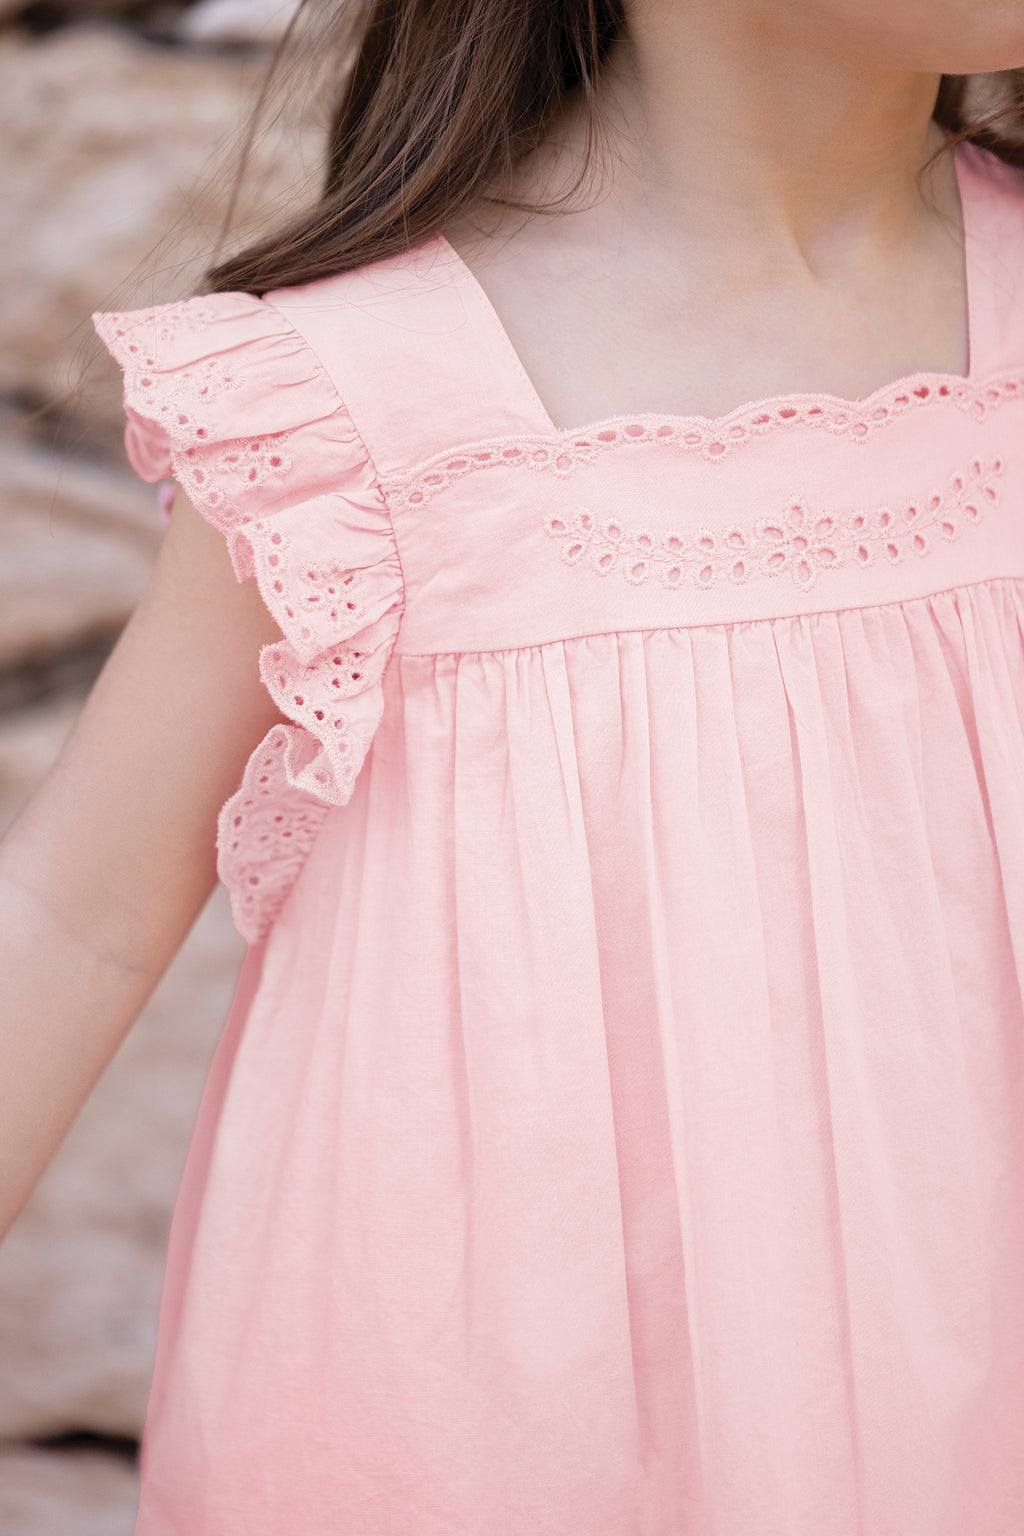 Dress - Pink English embroidery